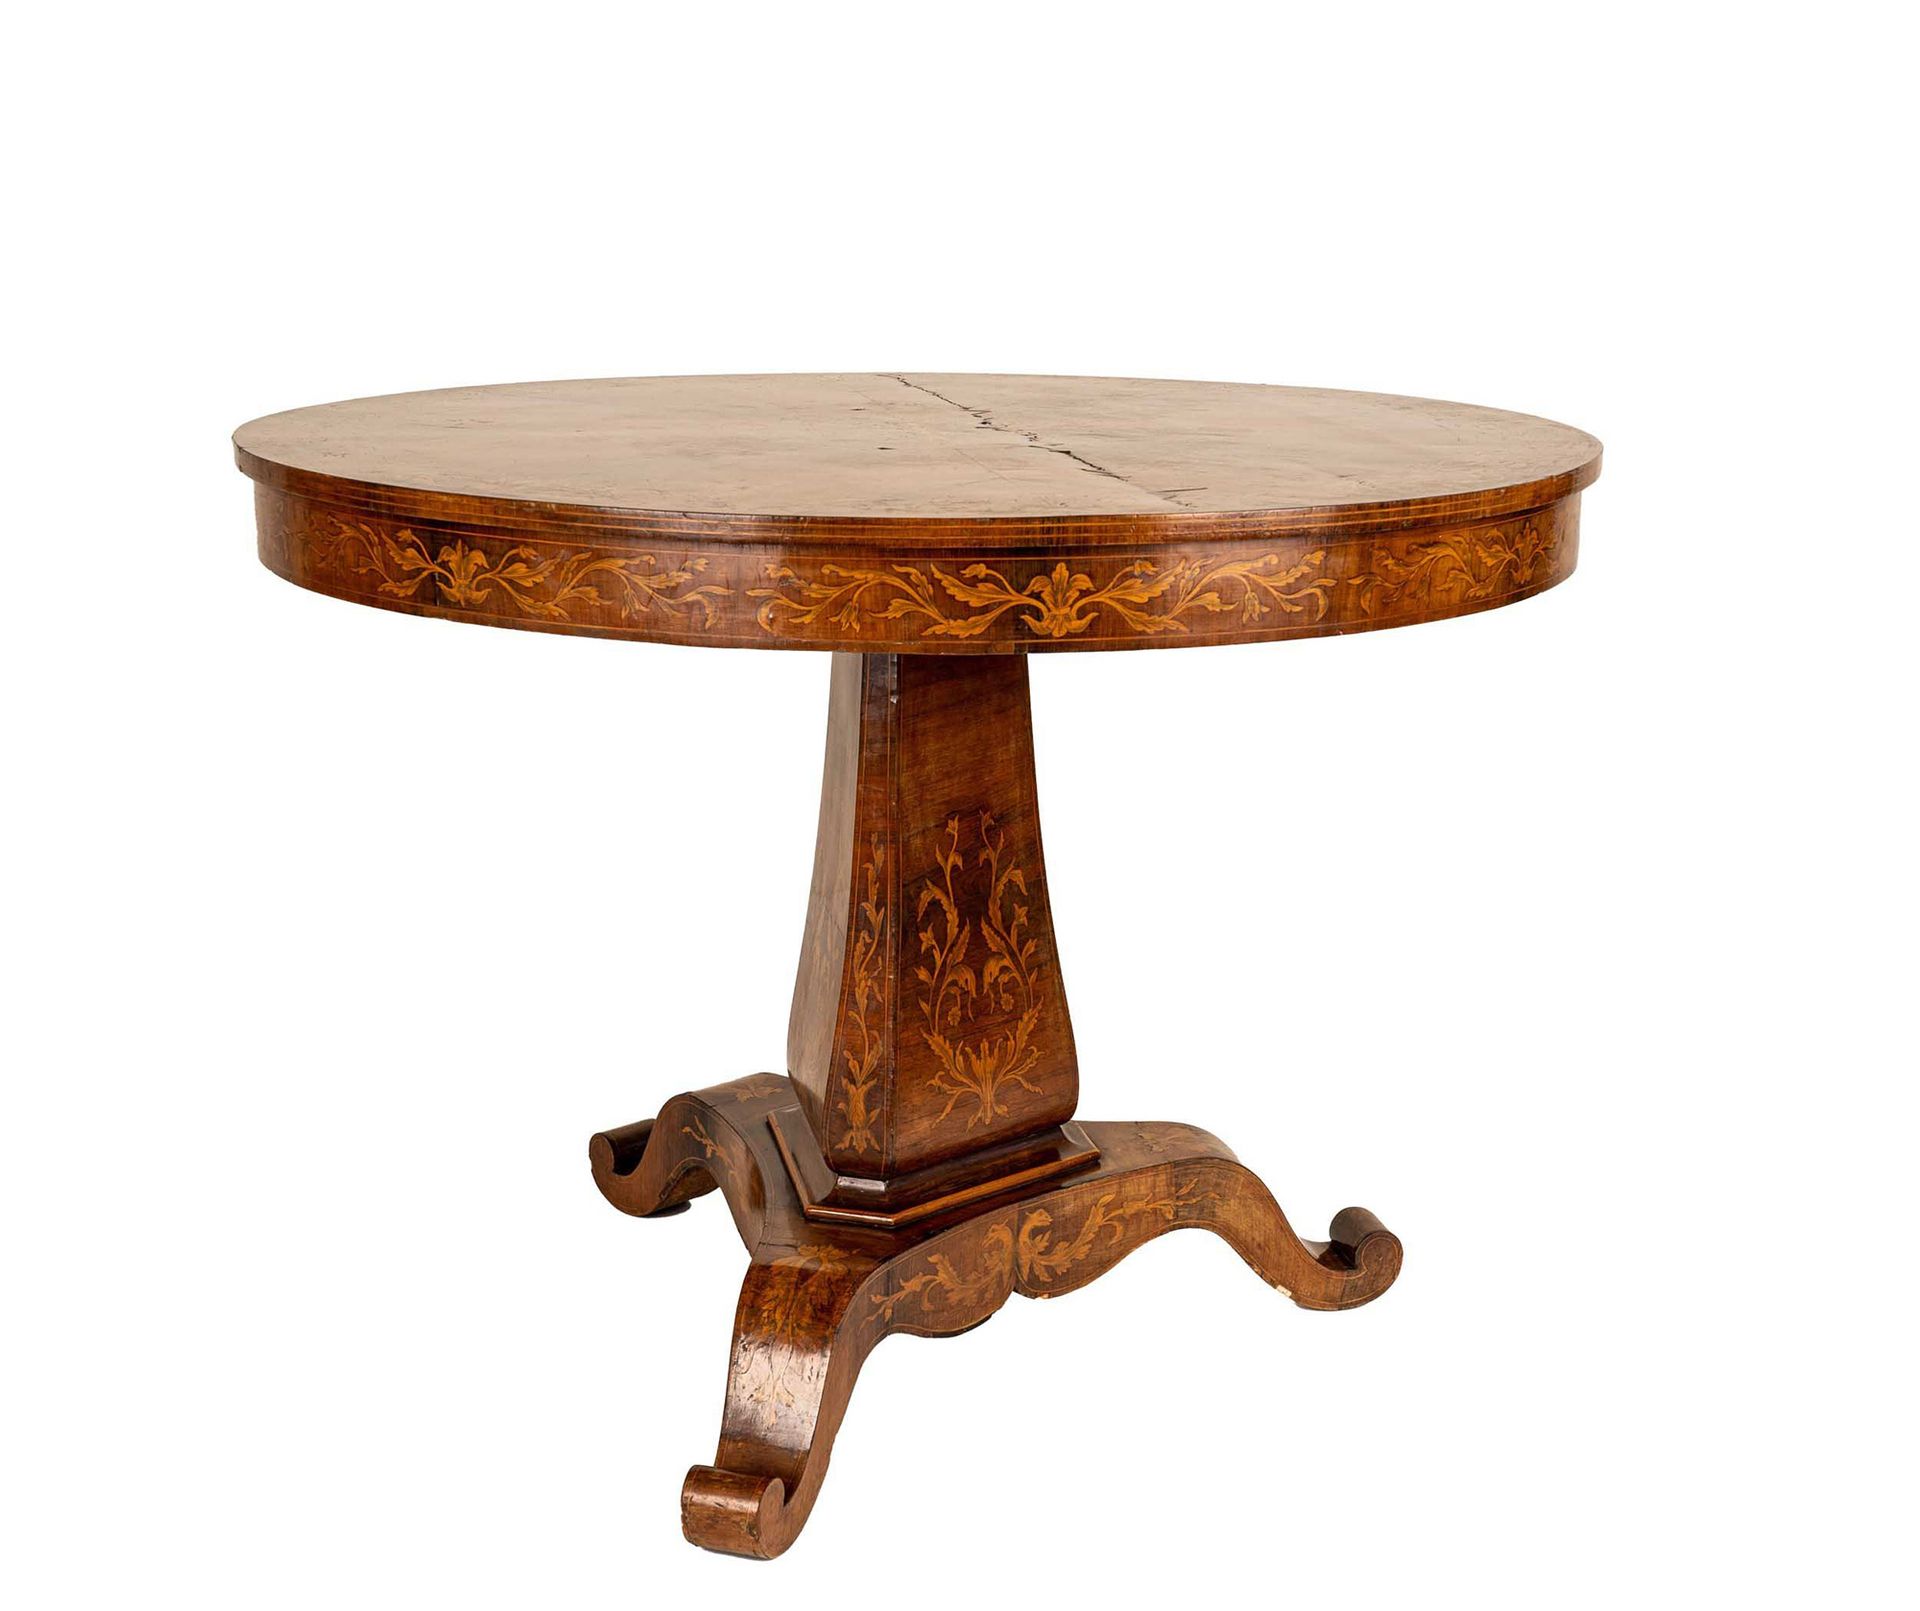 Null 中心桌

西西里岛查理十世时期，约1830年

镶嵌胡桃木，圆顶，三条移动的腿上有一个巴勒斯特柄

直径110厘米，高80厘米